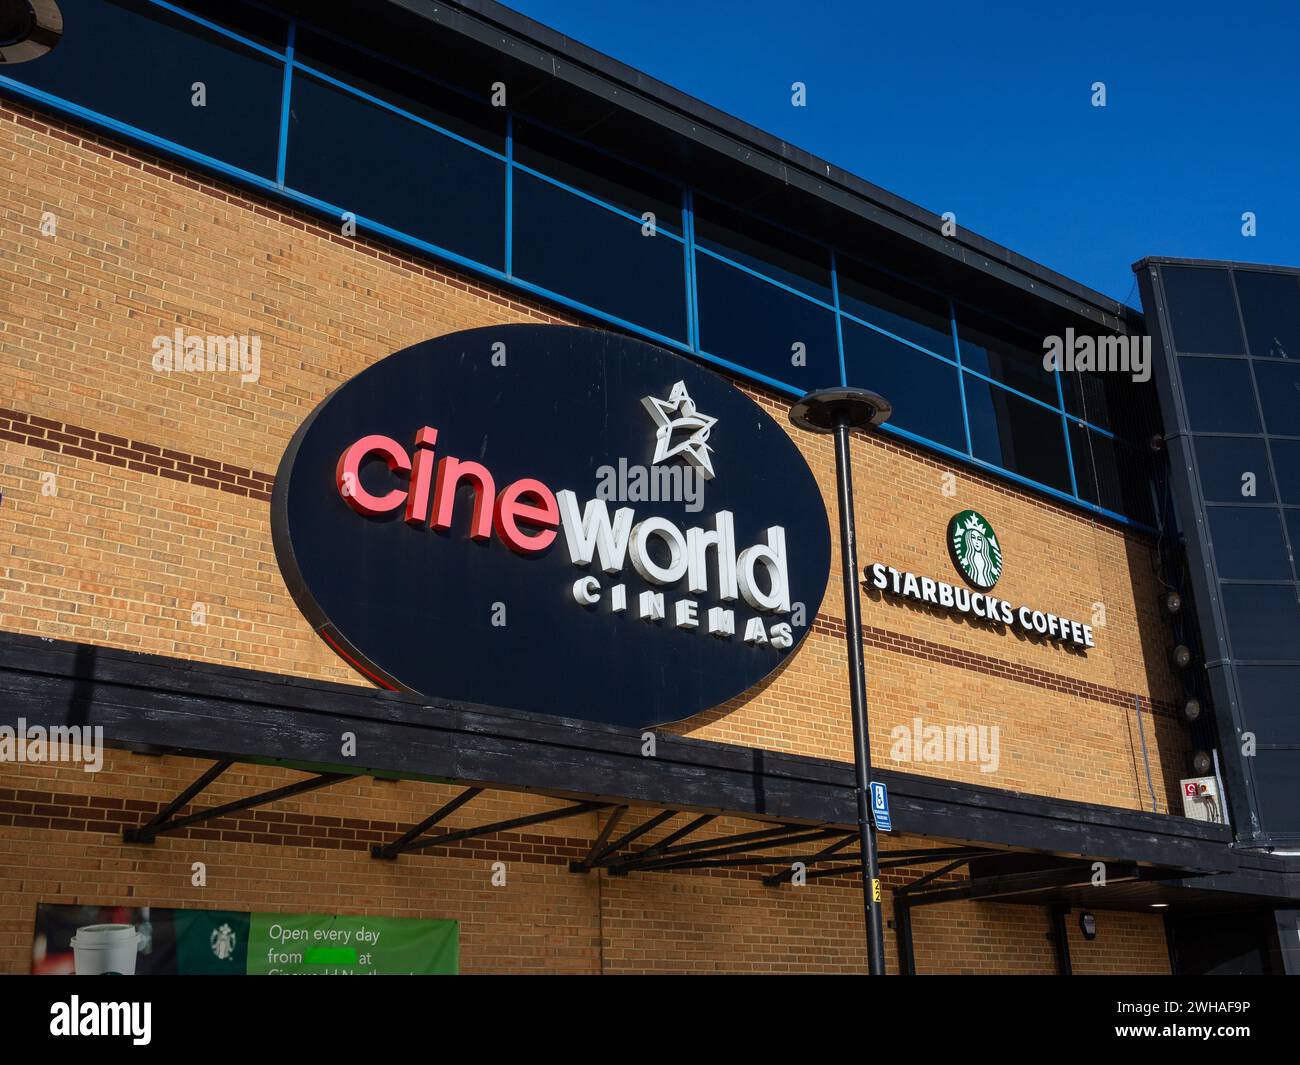 Cineworld cinema sign and logo, Sixfields, Northampton, UK Stock Photo